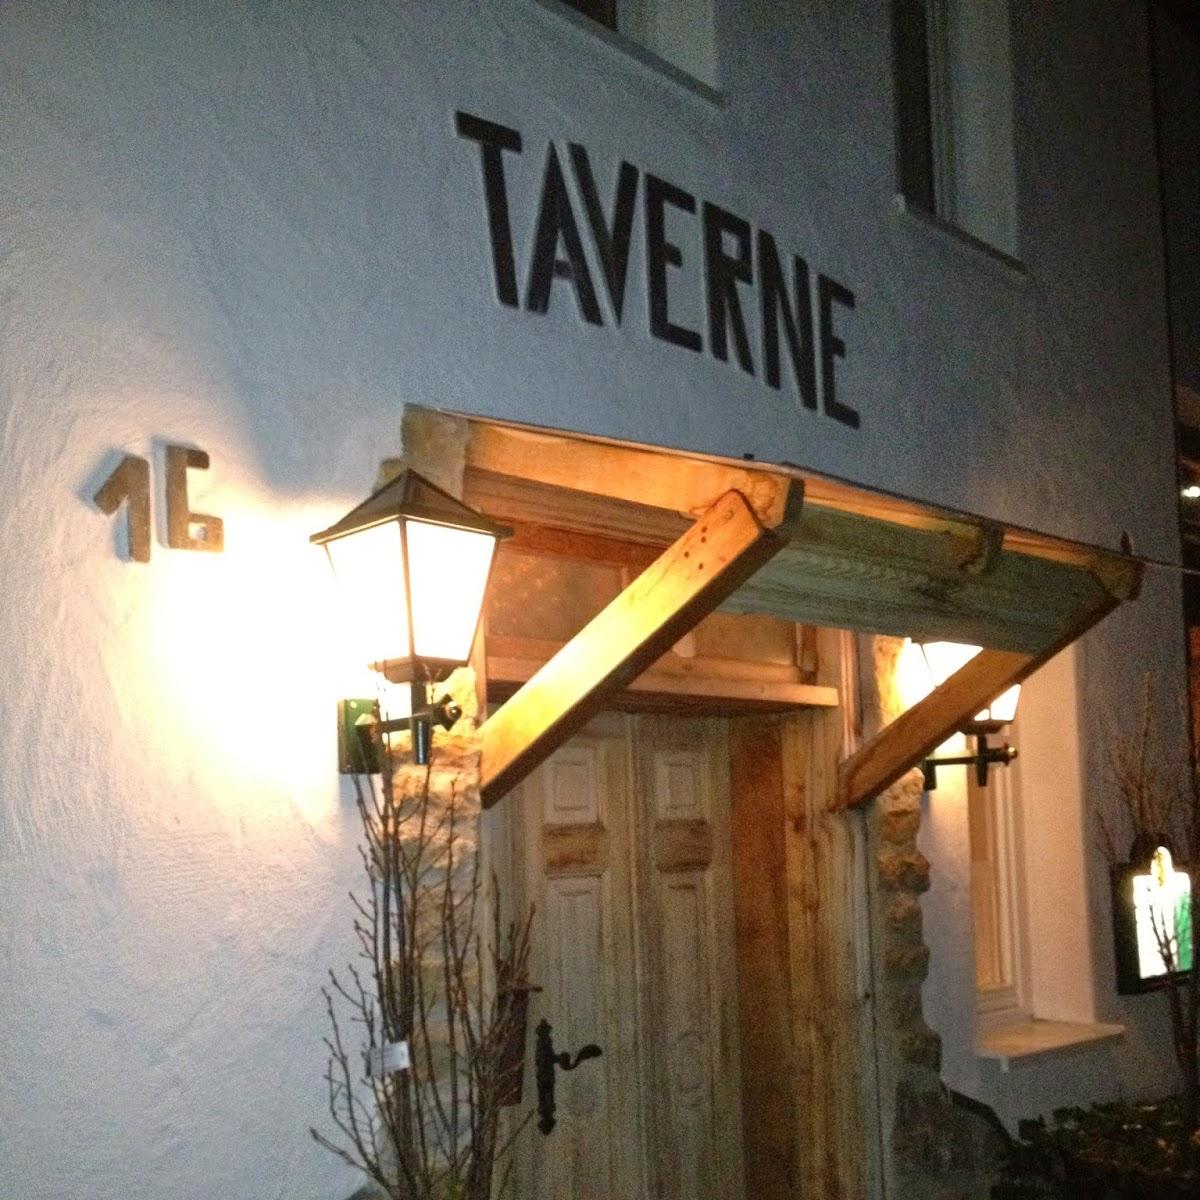 Restaurant "TAVERNE" in  Balingen